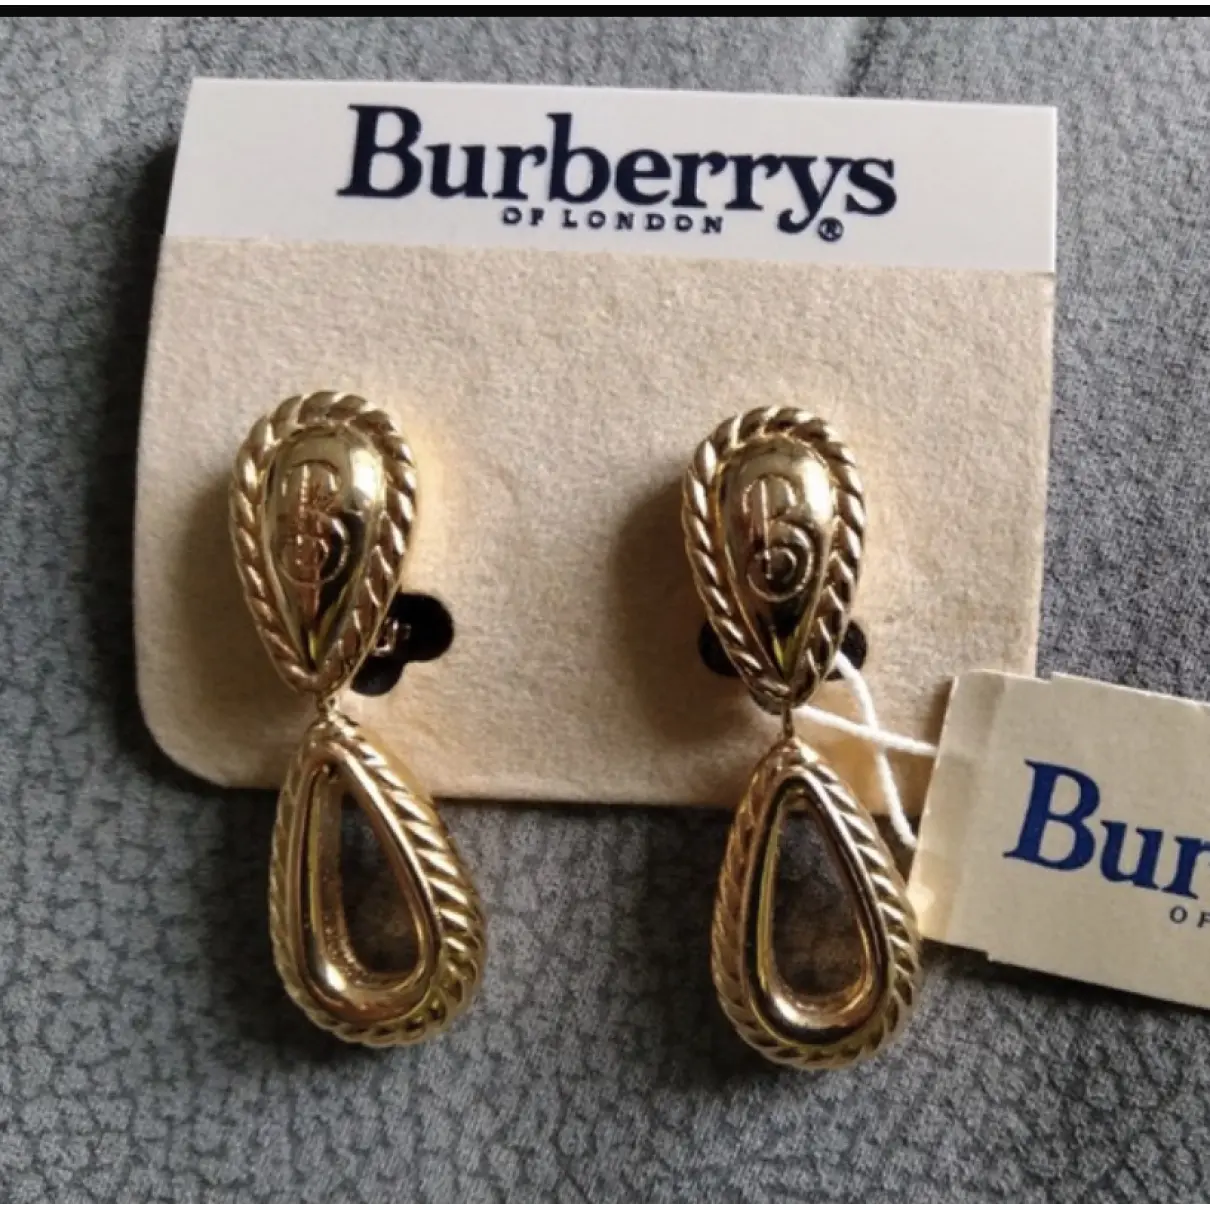 Buy Burberry Earrings online